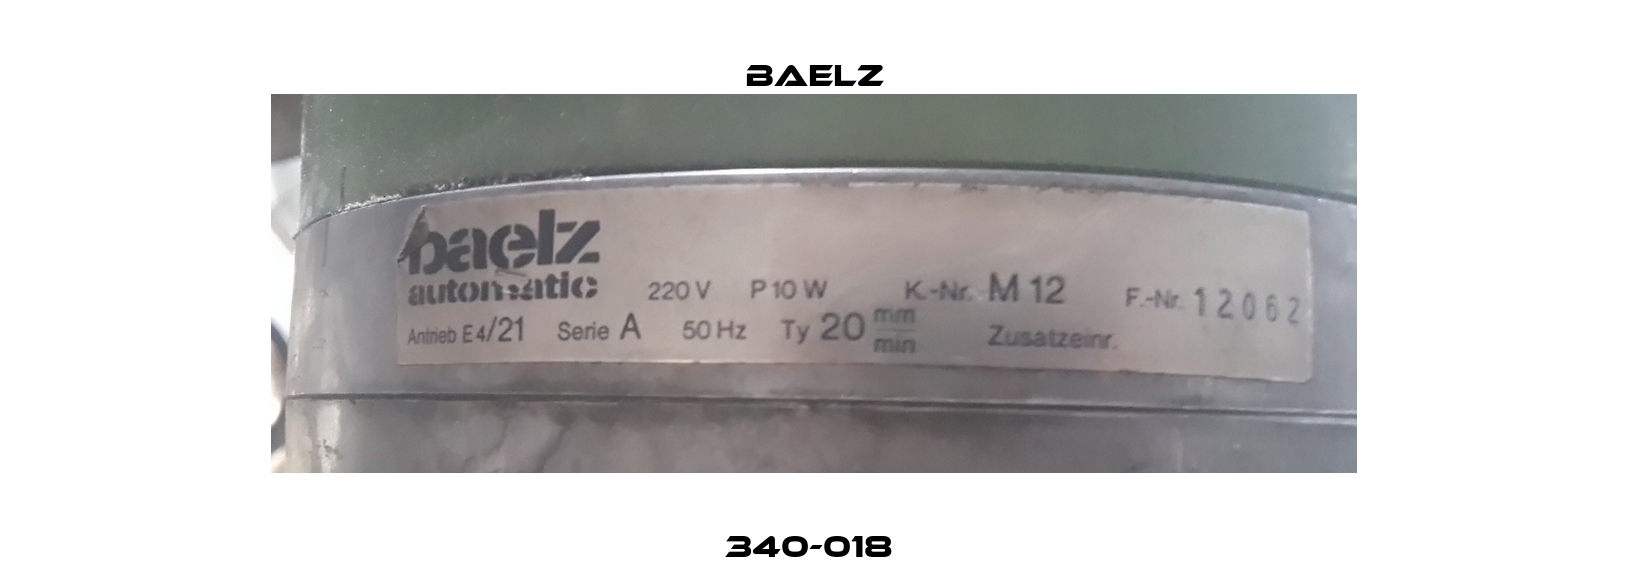 340-018  Baelz